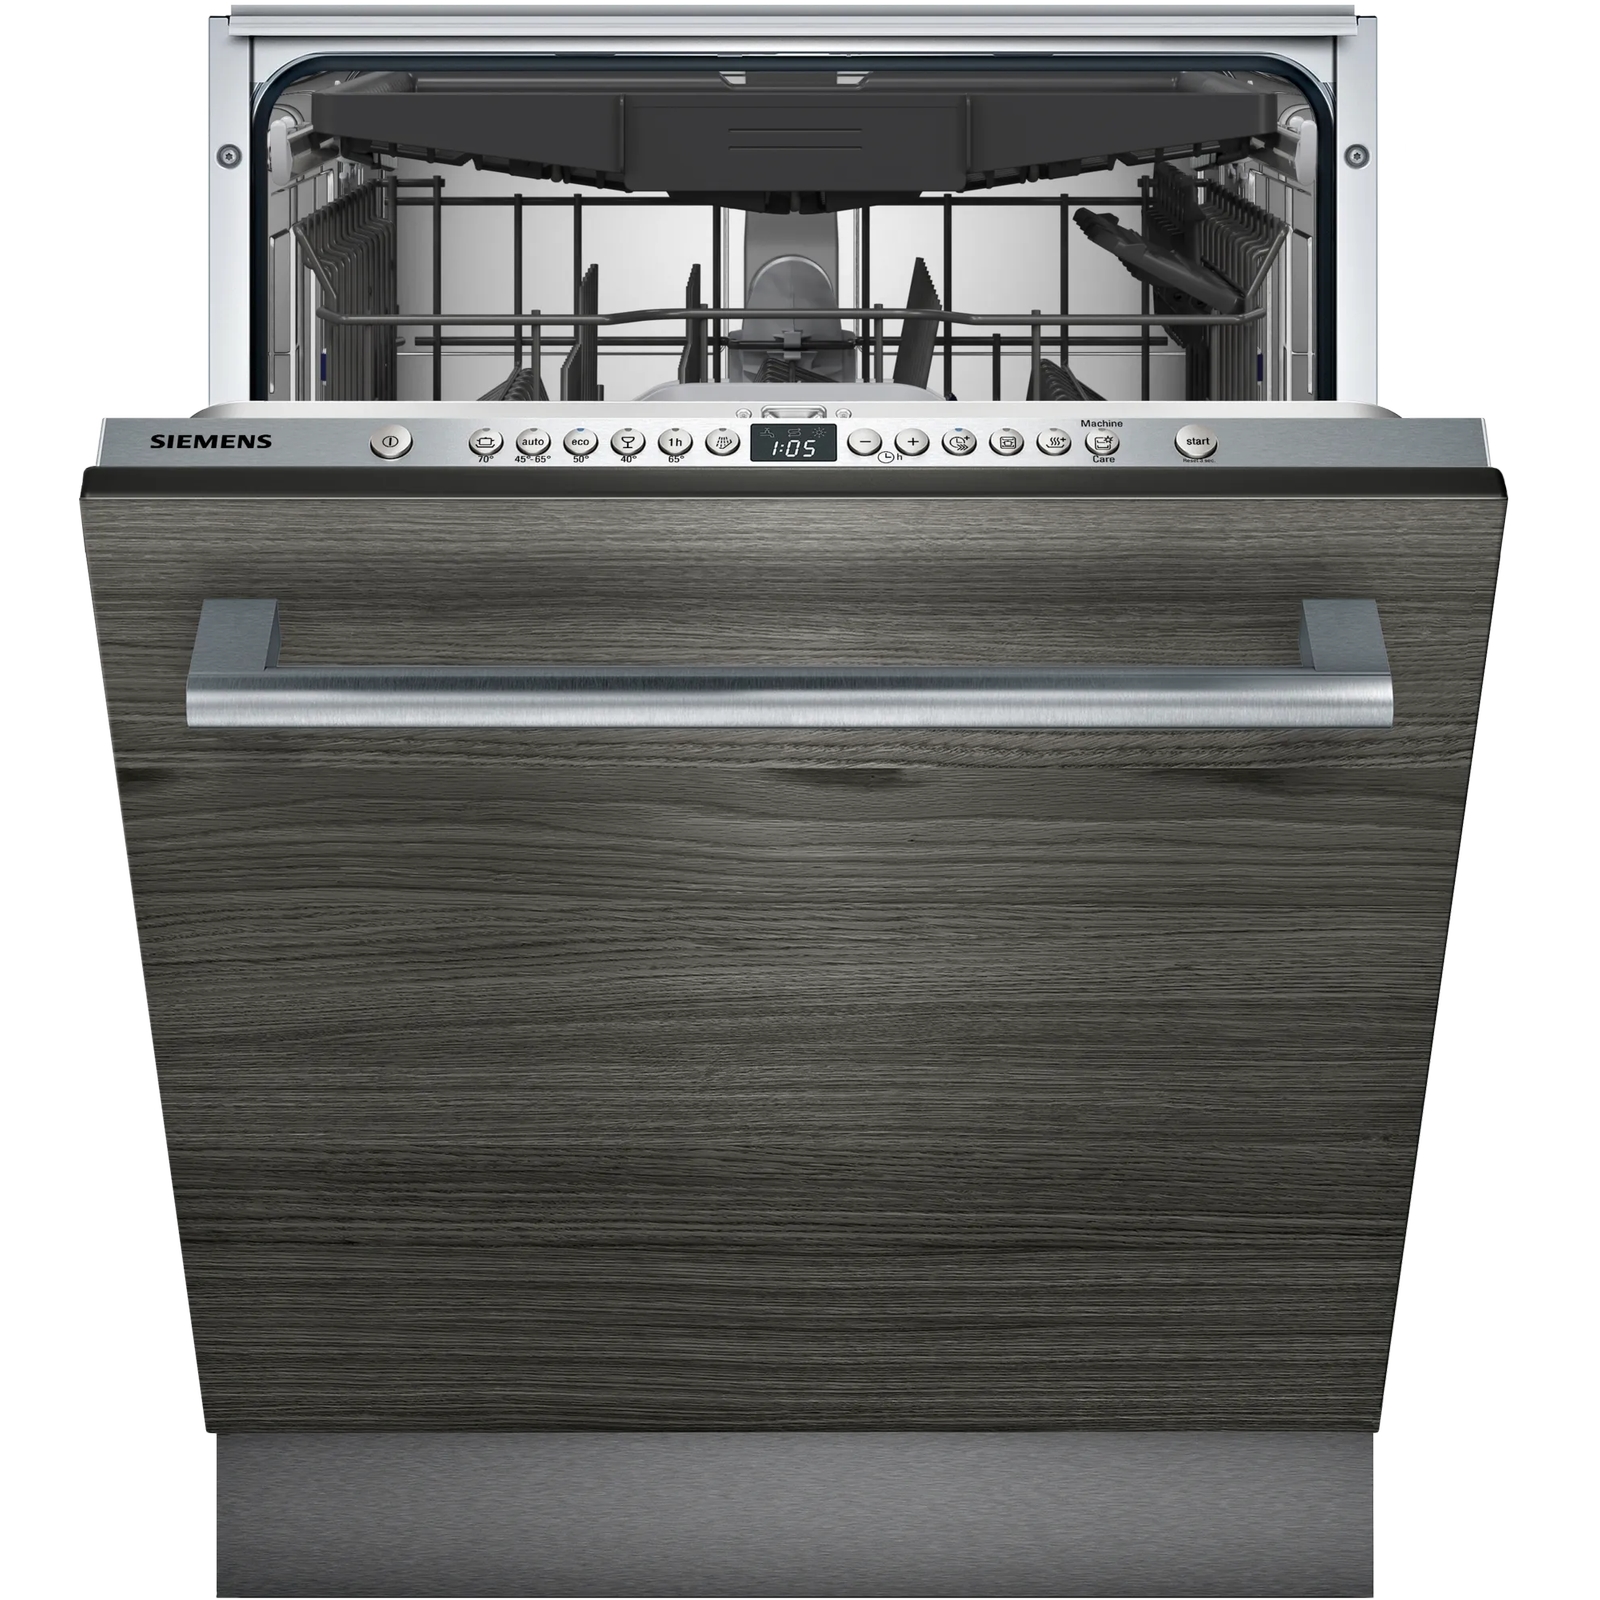 Встраиваемая посудомоечная машина Siemens SN636X06KE встраиваемая посудомоечная машина siemens sn87yx03ce